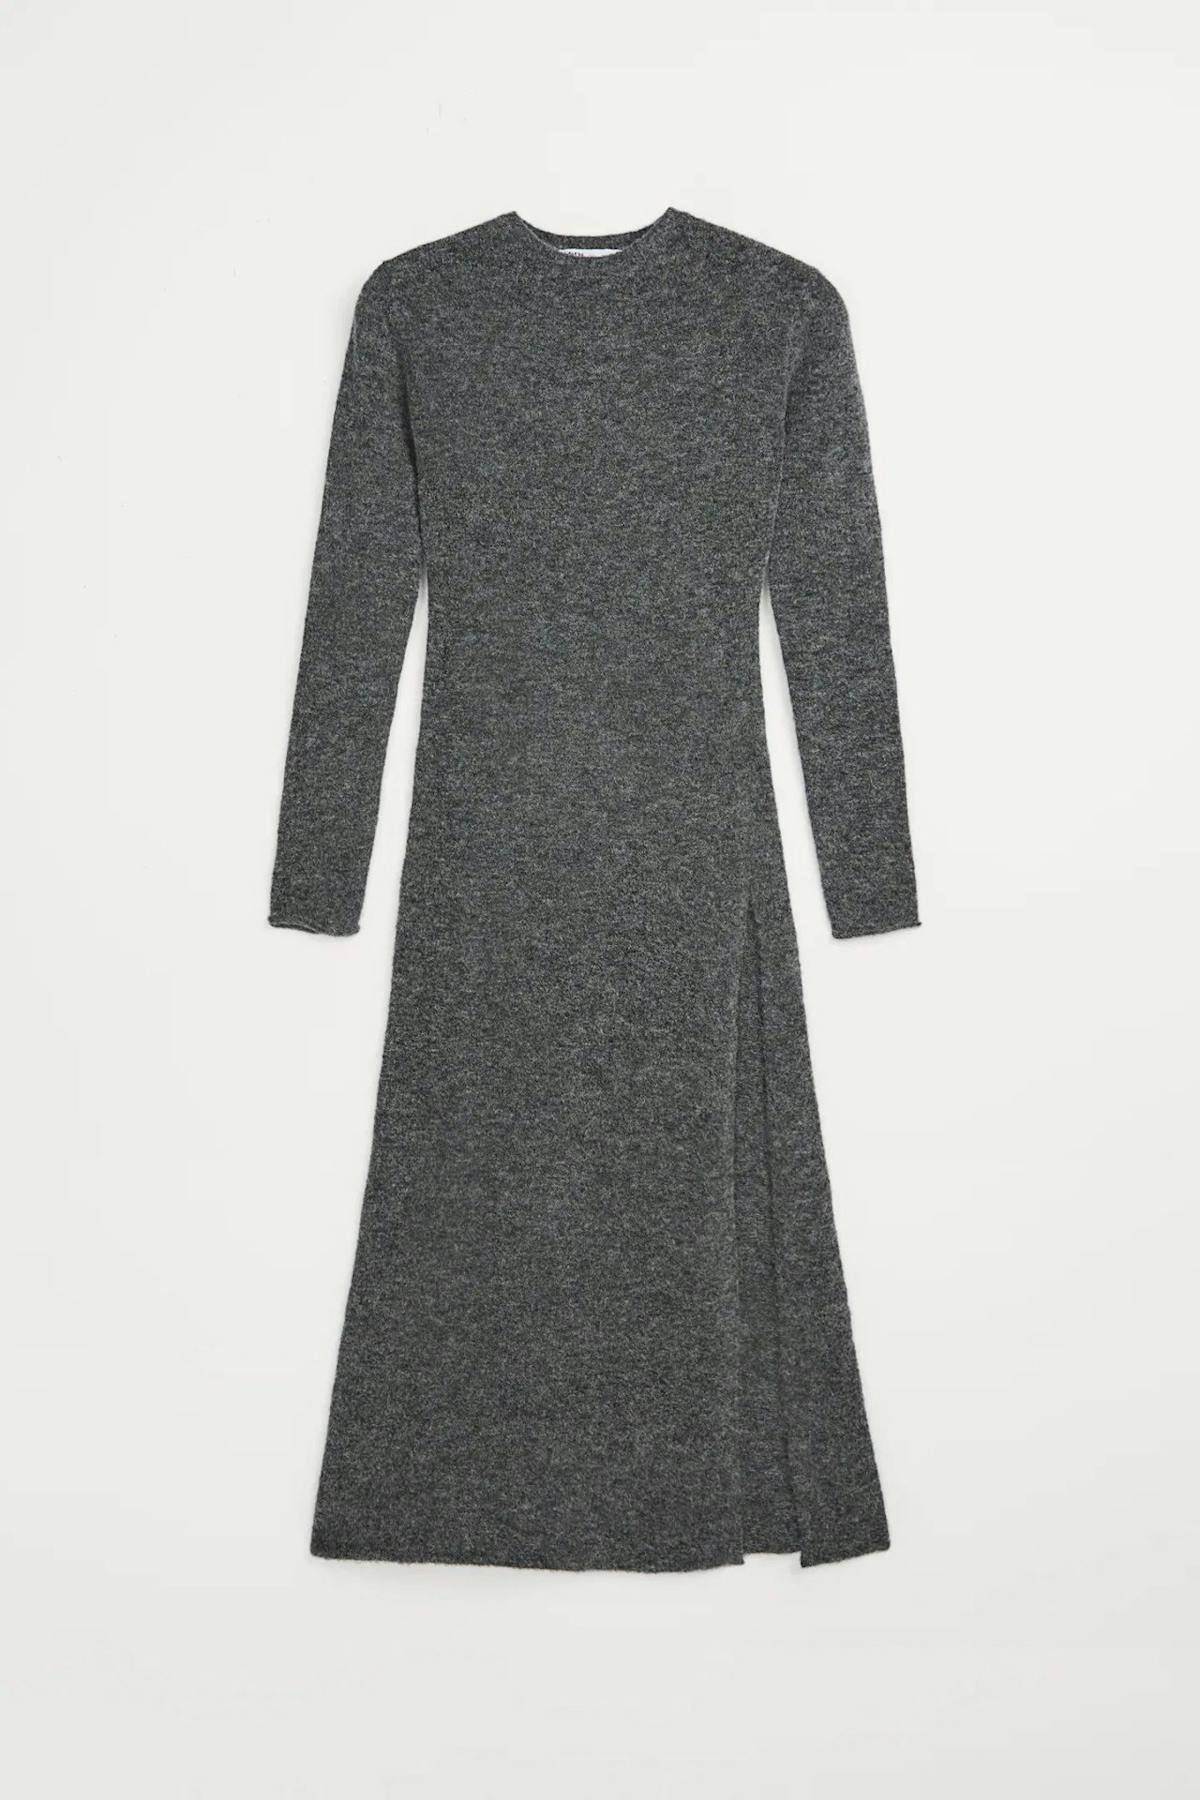 Best dresses for Christmas day: Zara grey knitted dress